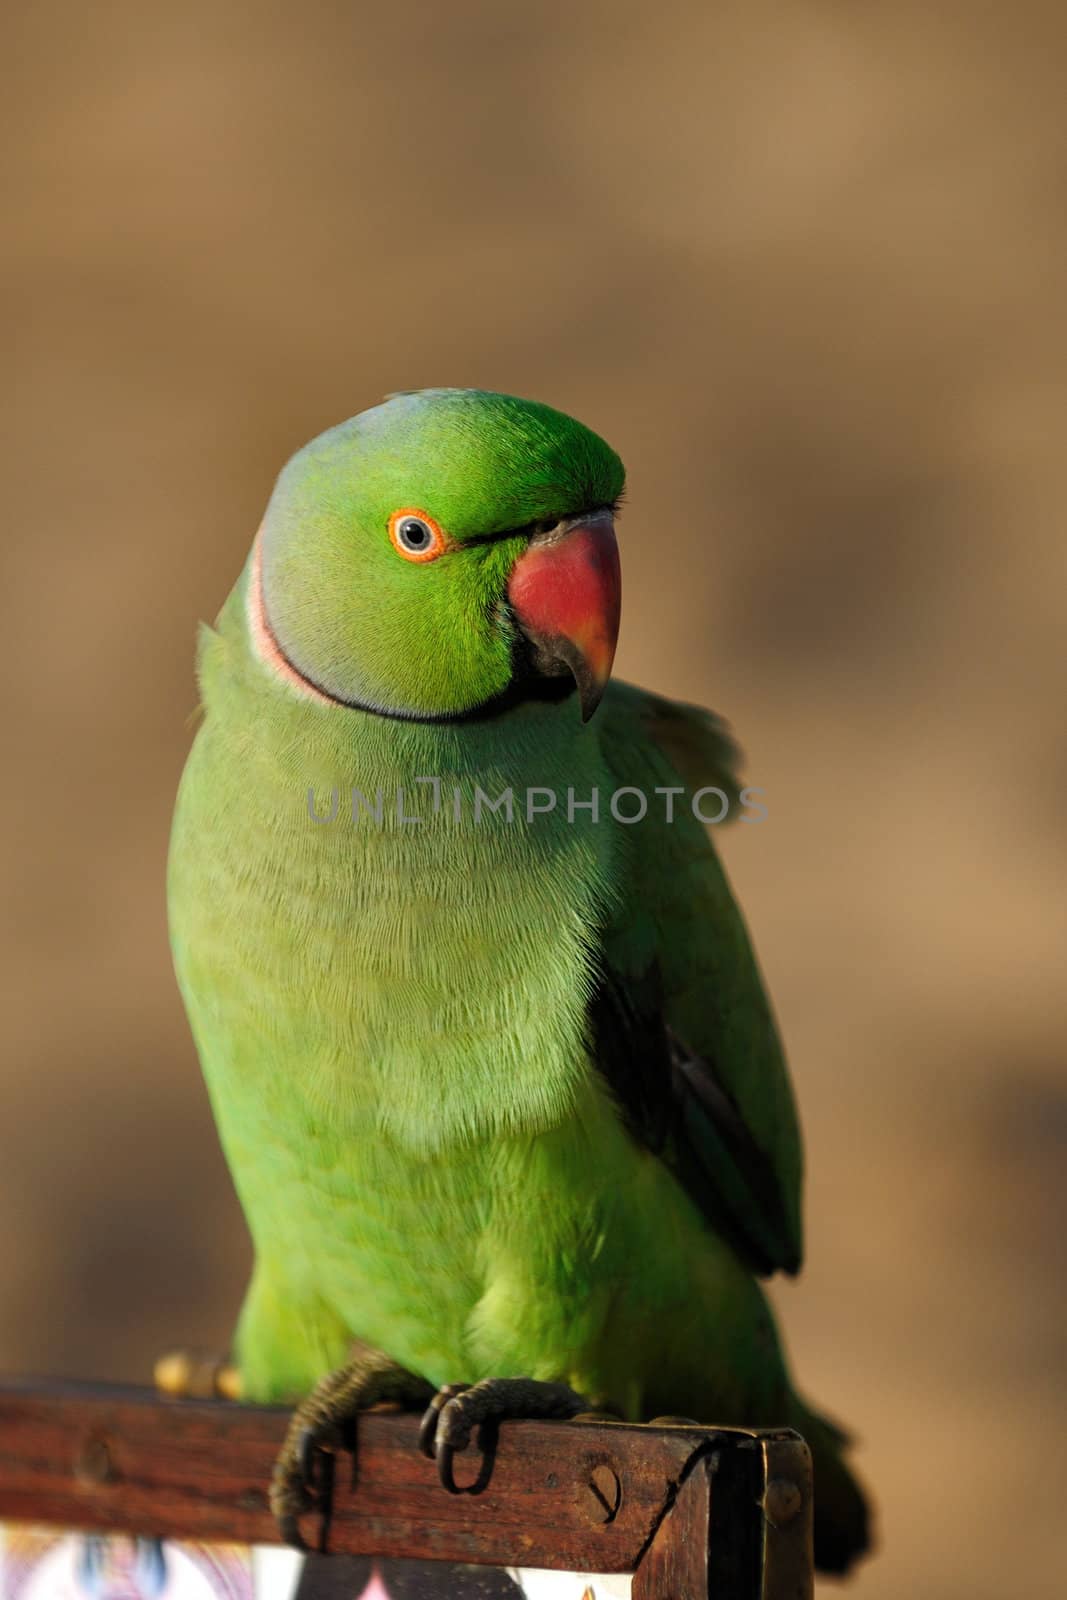 A close up shot of a green parrot